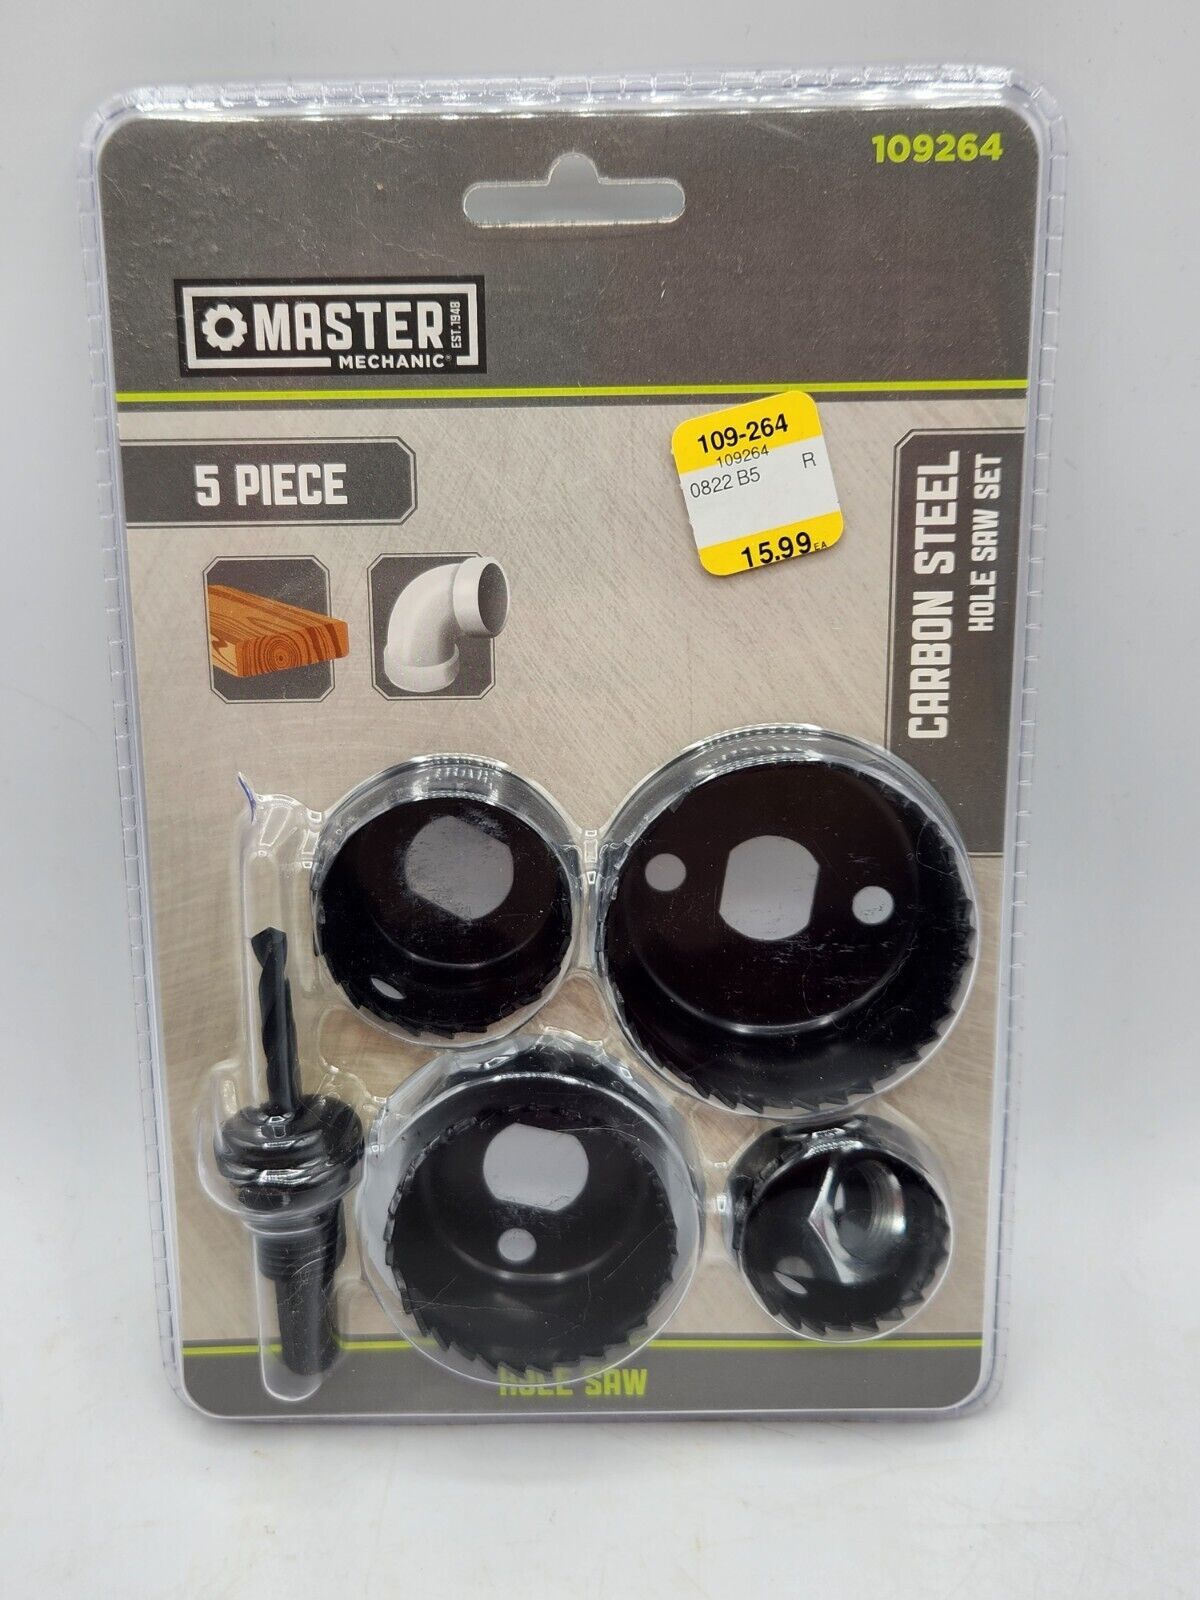 Master Mechanic 5 piece Hole Saw Kit DIY Projects True Value Black 109264 - $5.89